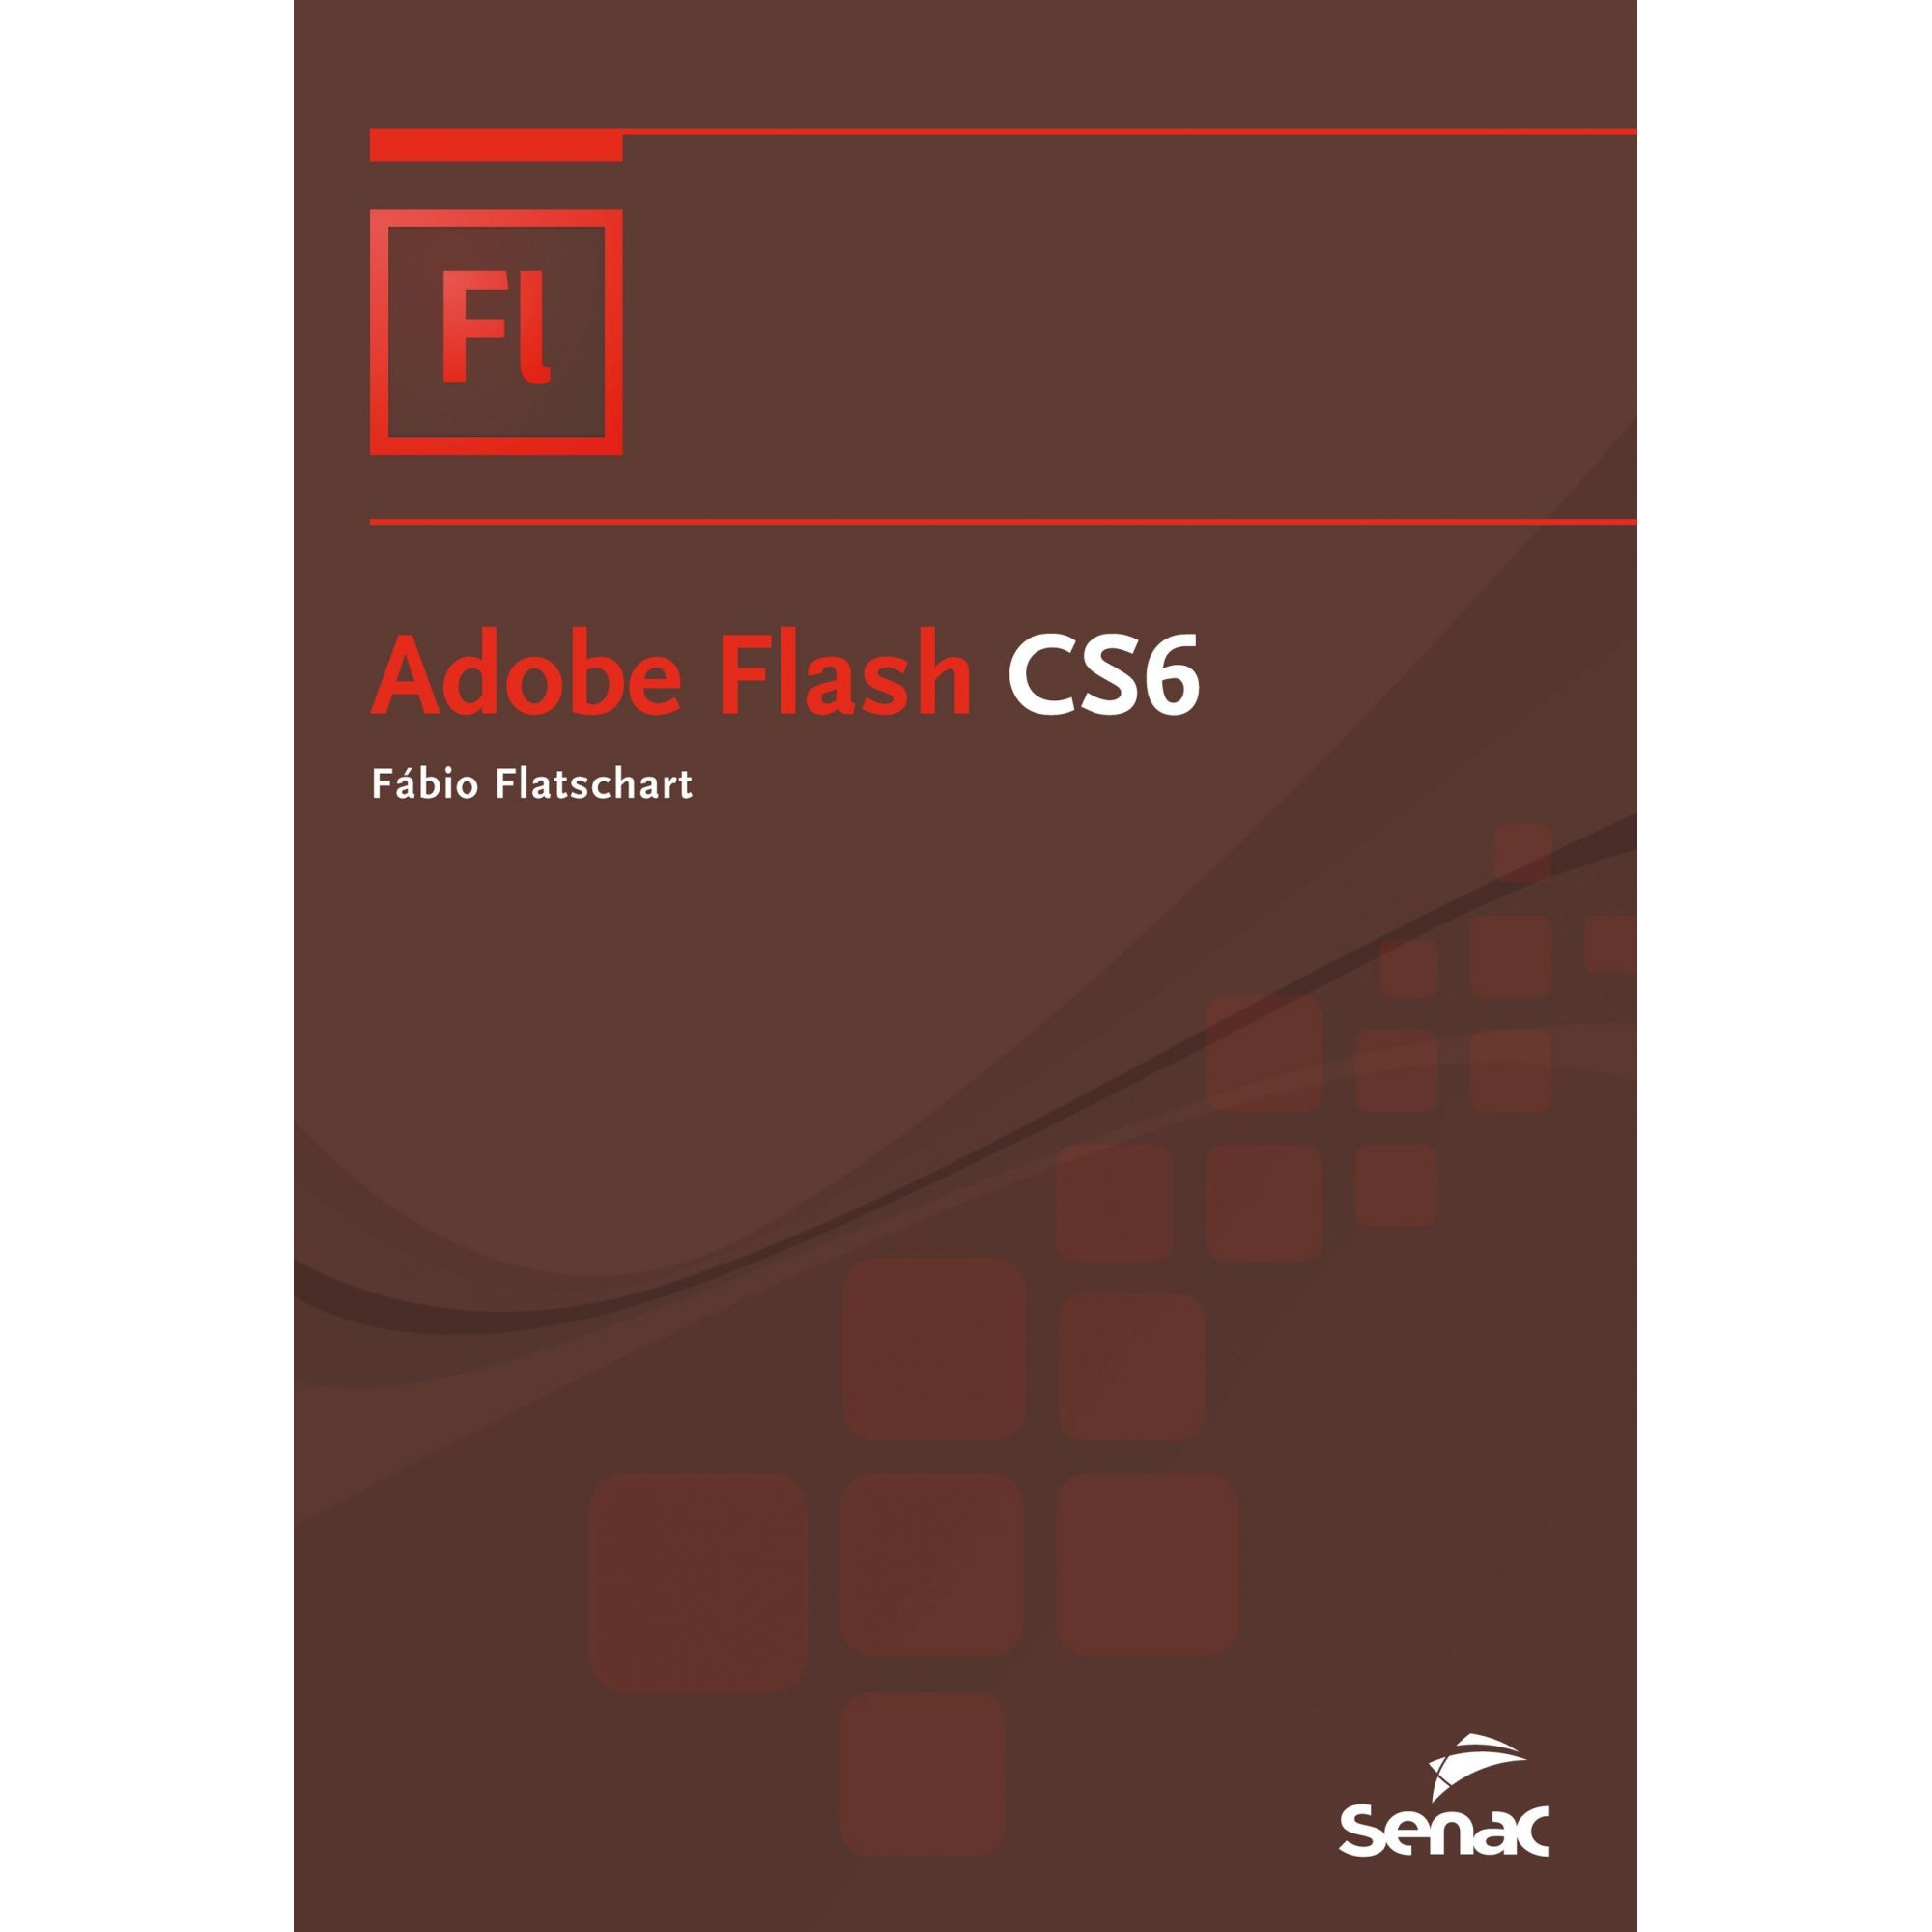 Adobe flash CS6